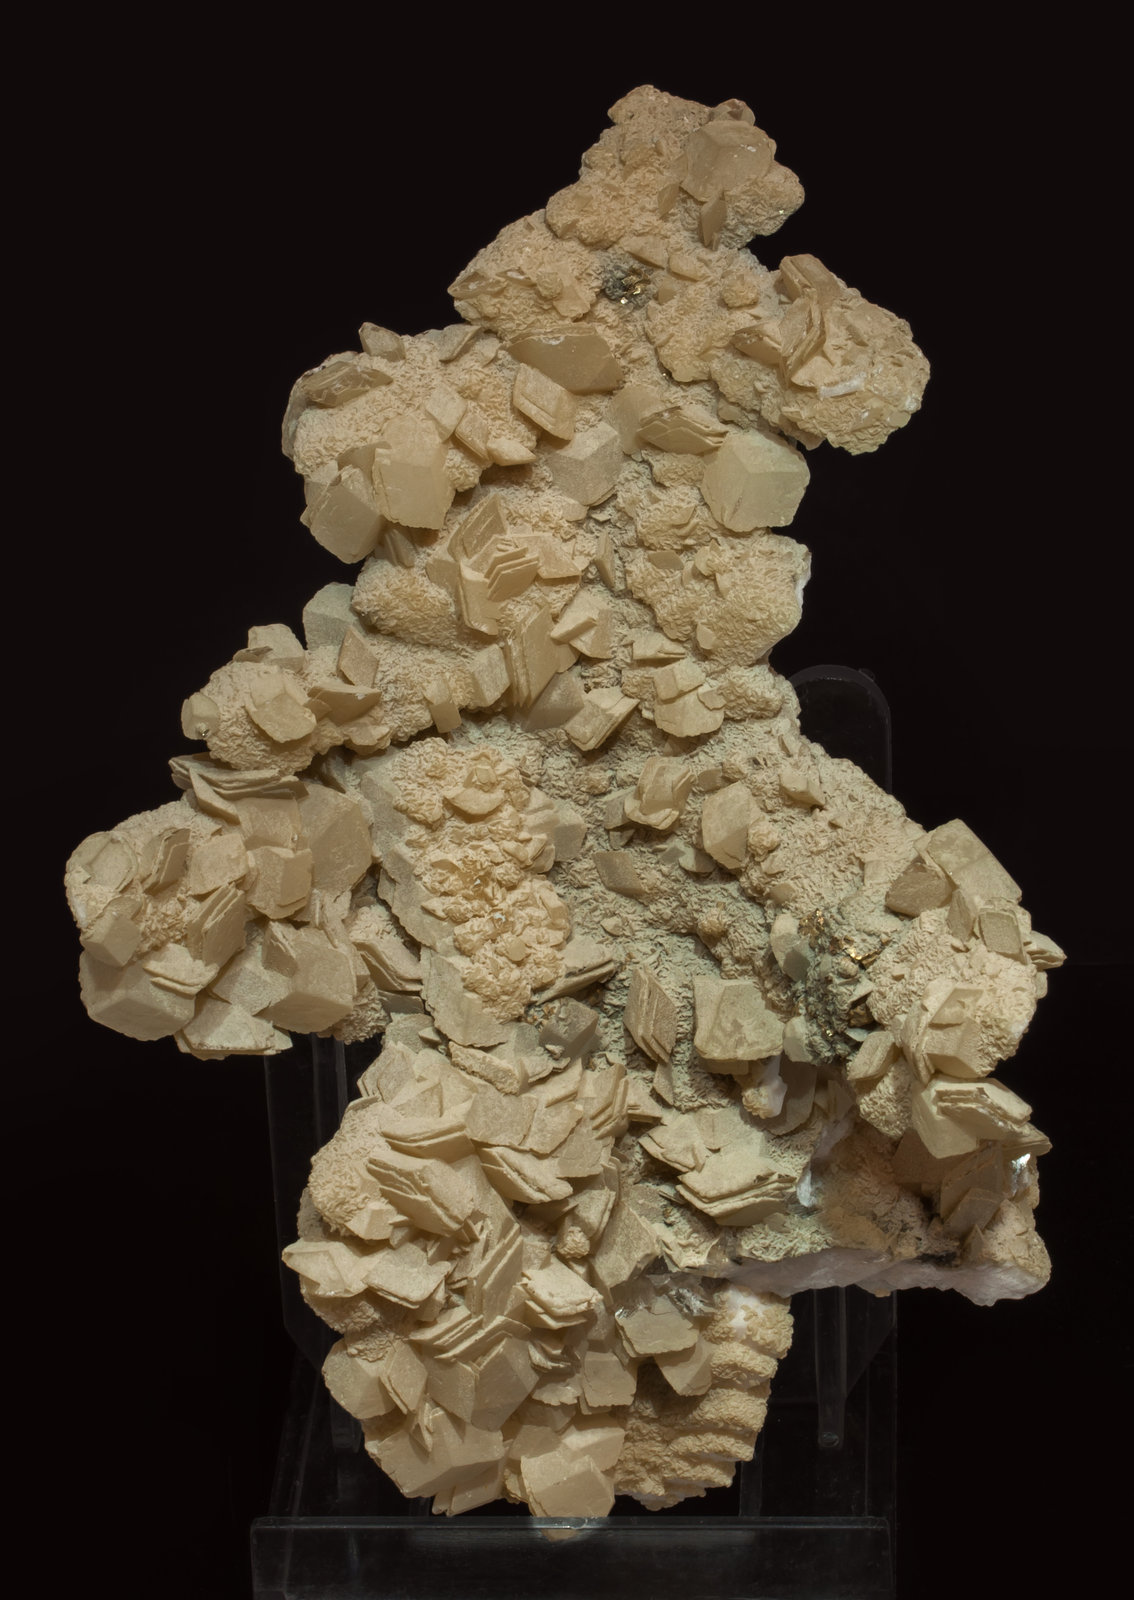 specimens/s_imagesAL4/Dolomite-EE87AL4r.jpg